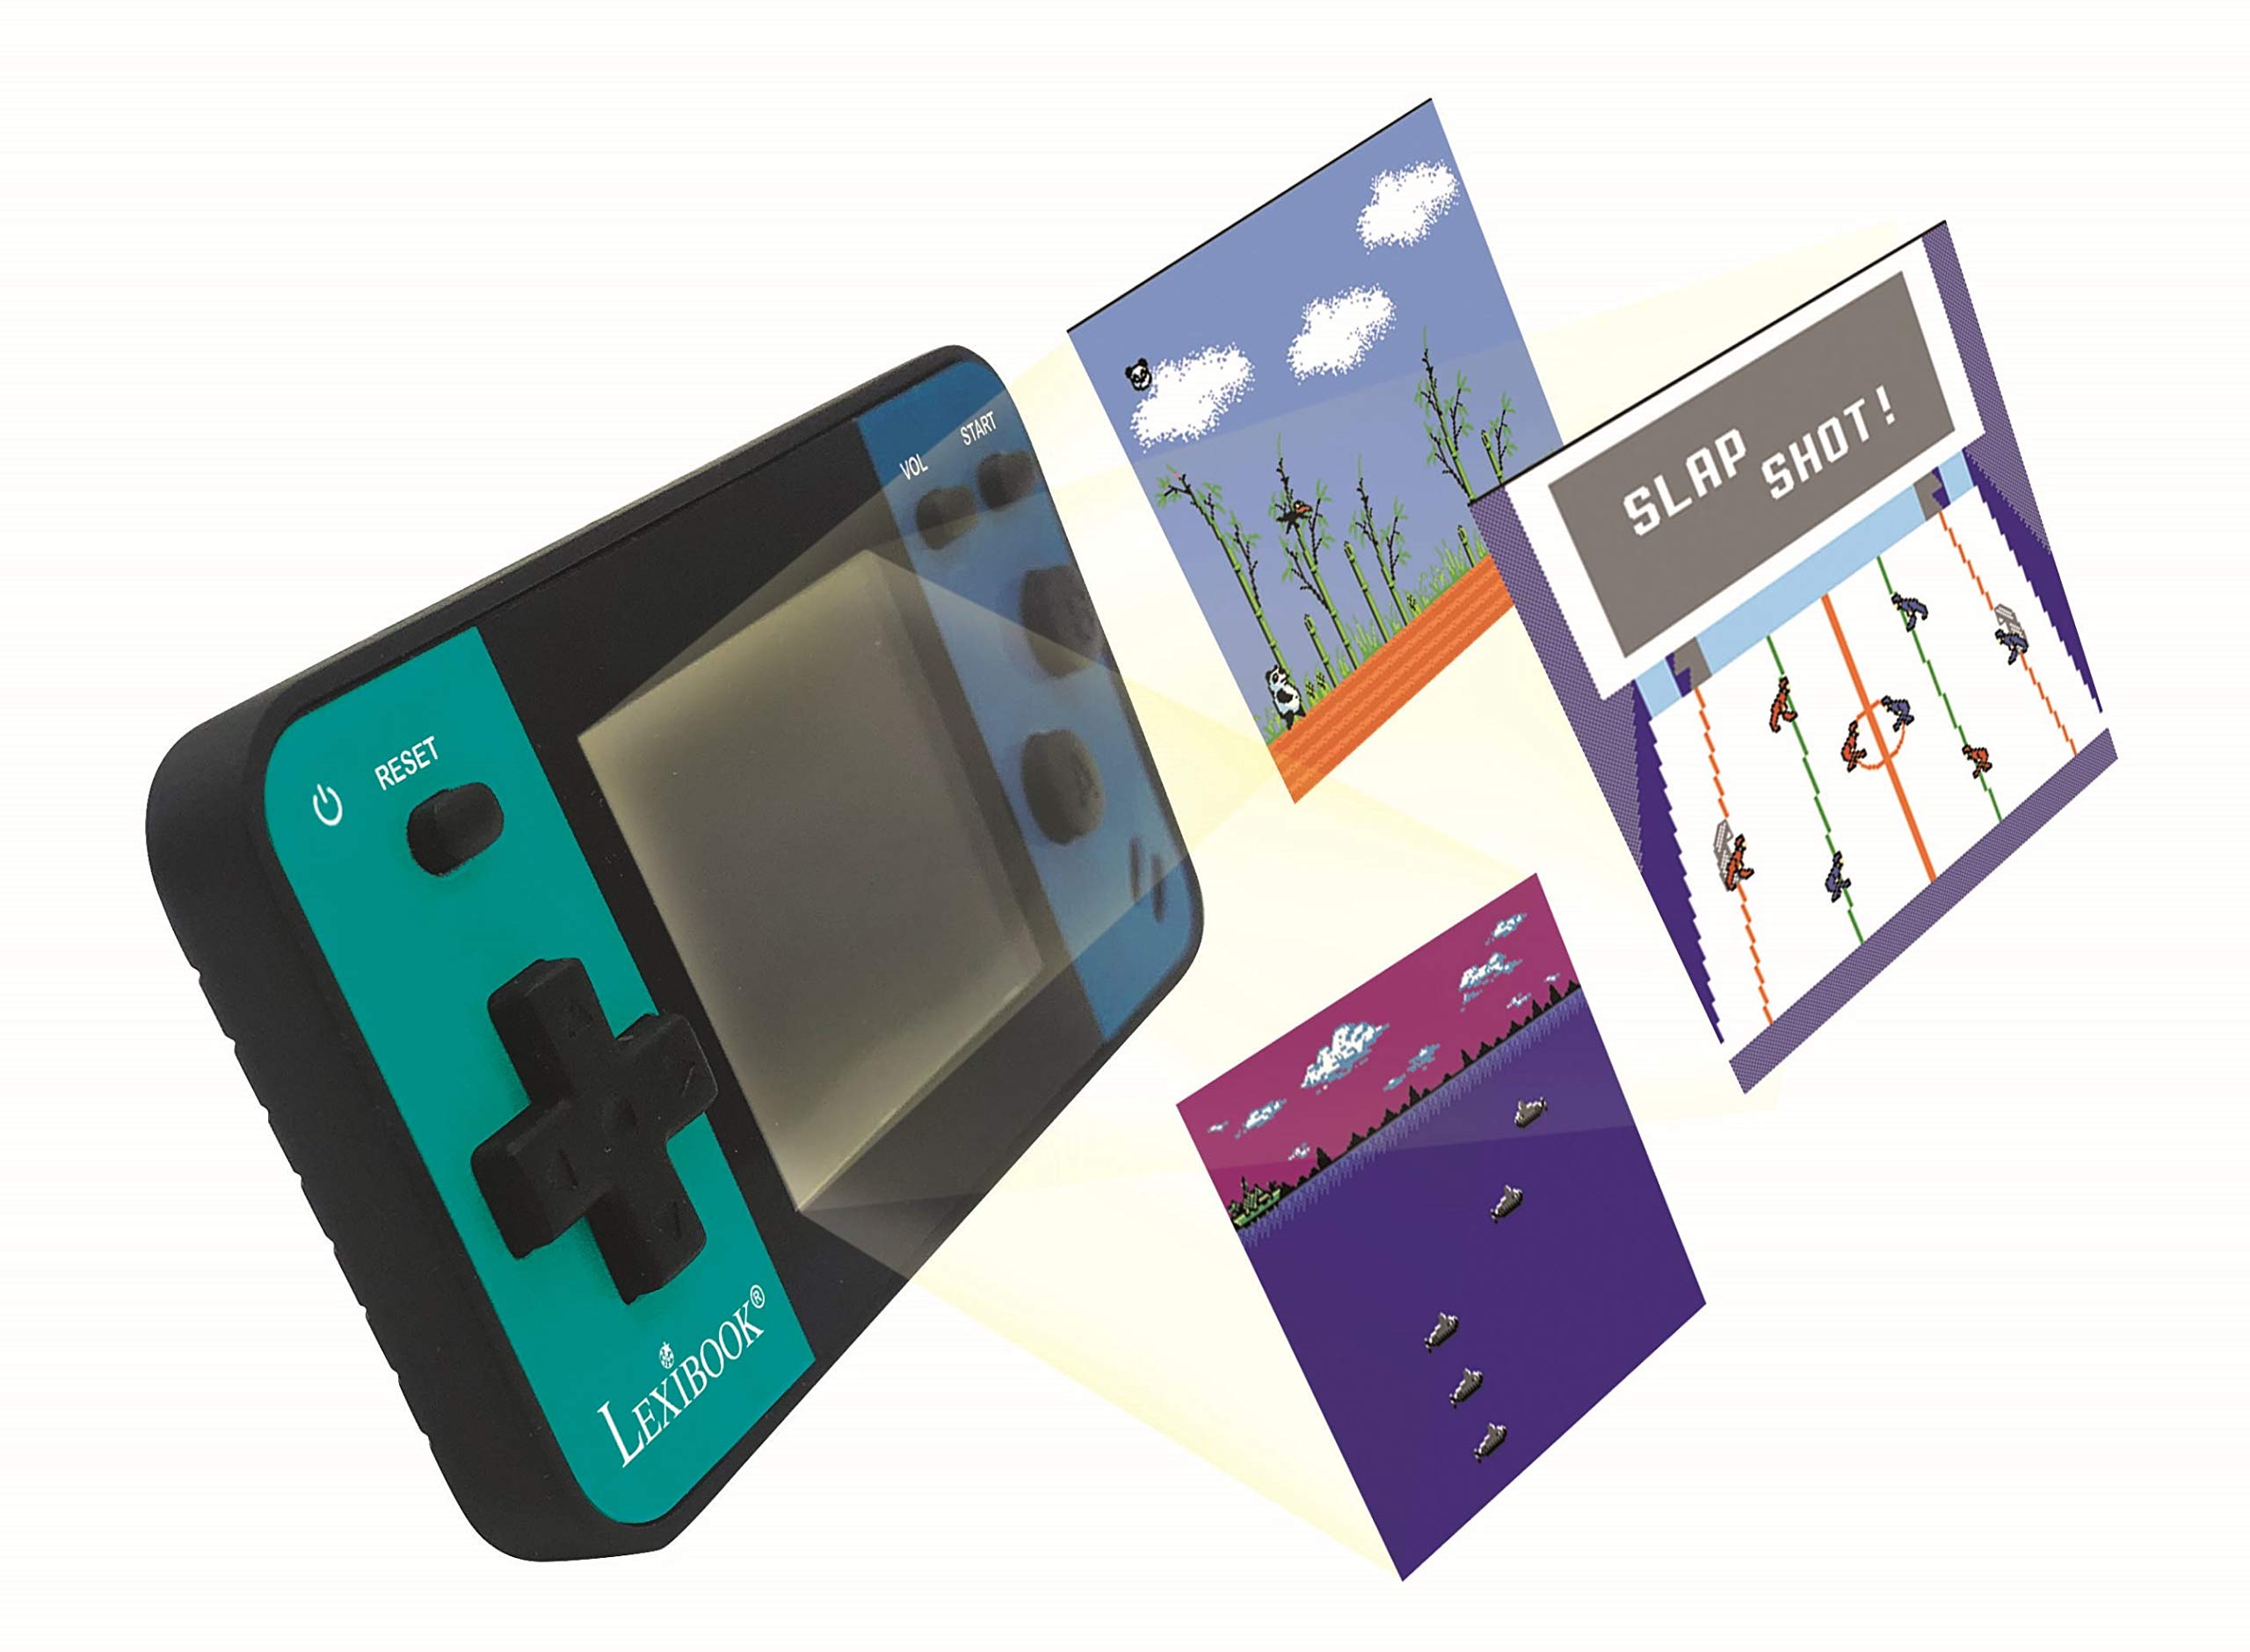 LEXiBOOK Portable Handheld Game Console Cyber Arcade Mini 8 Games, 1.8